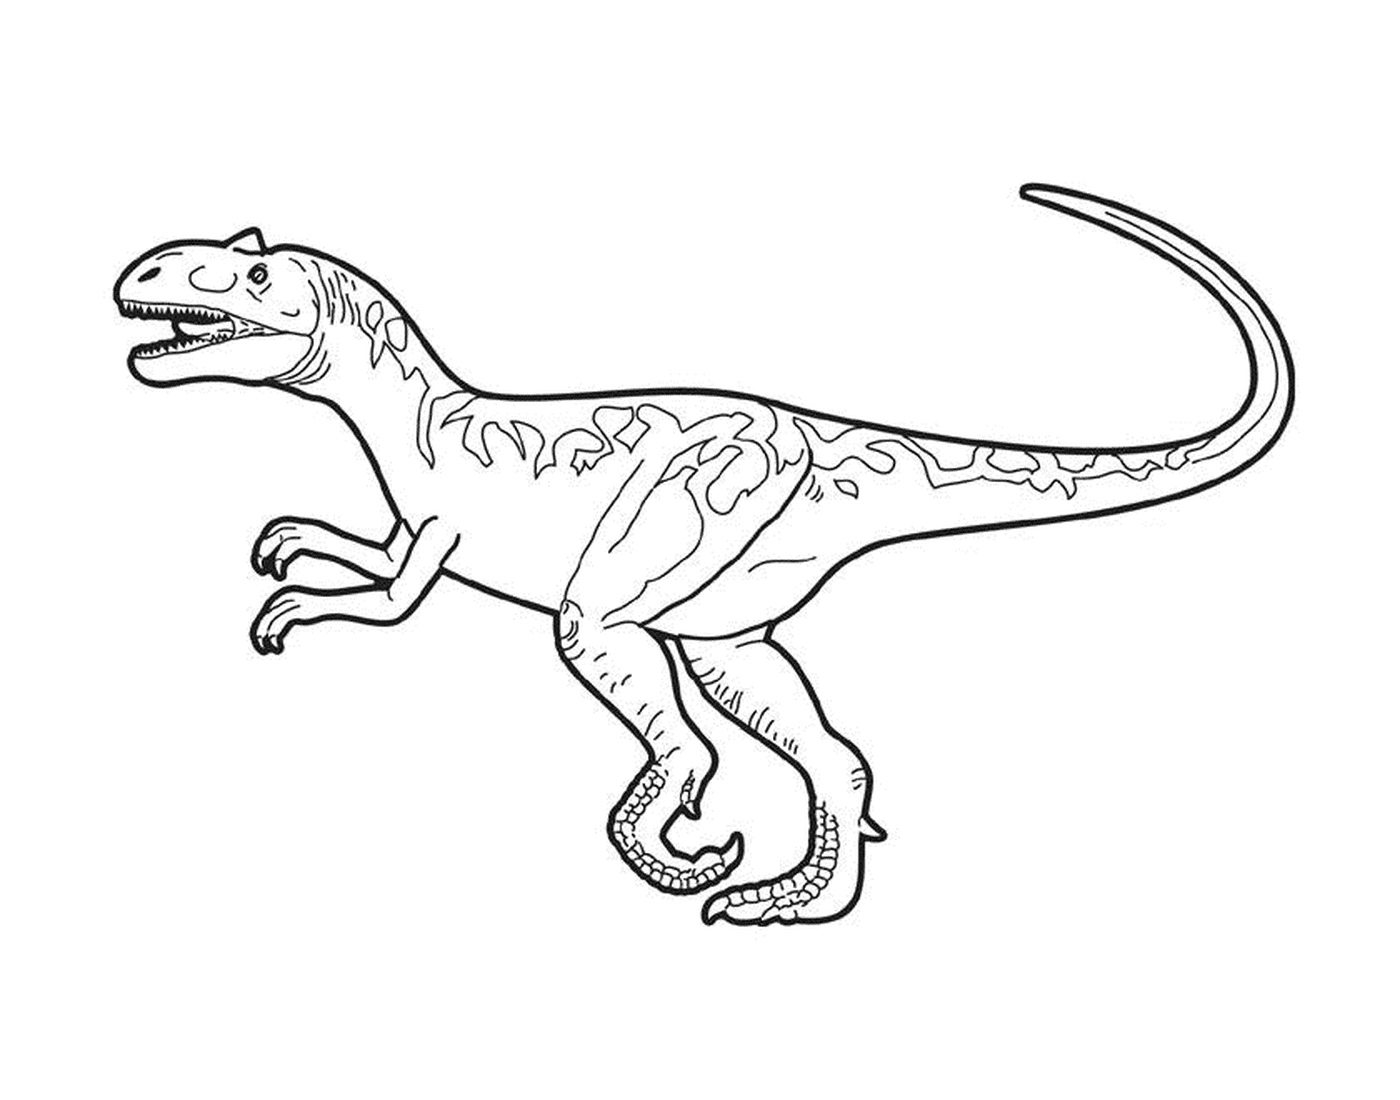  A running velociraptor 